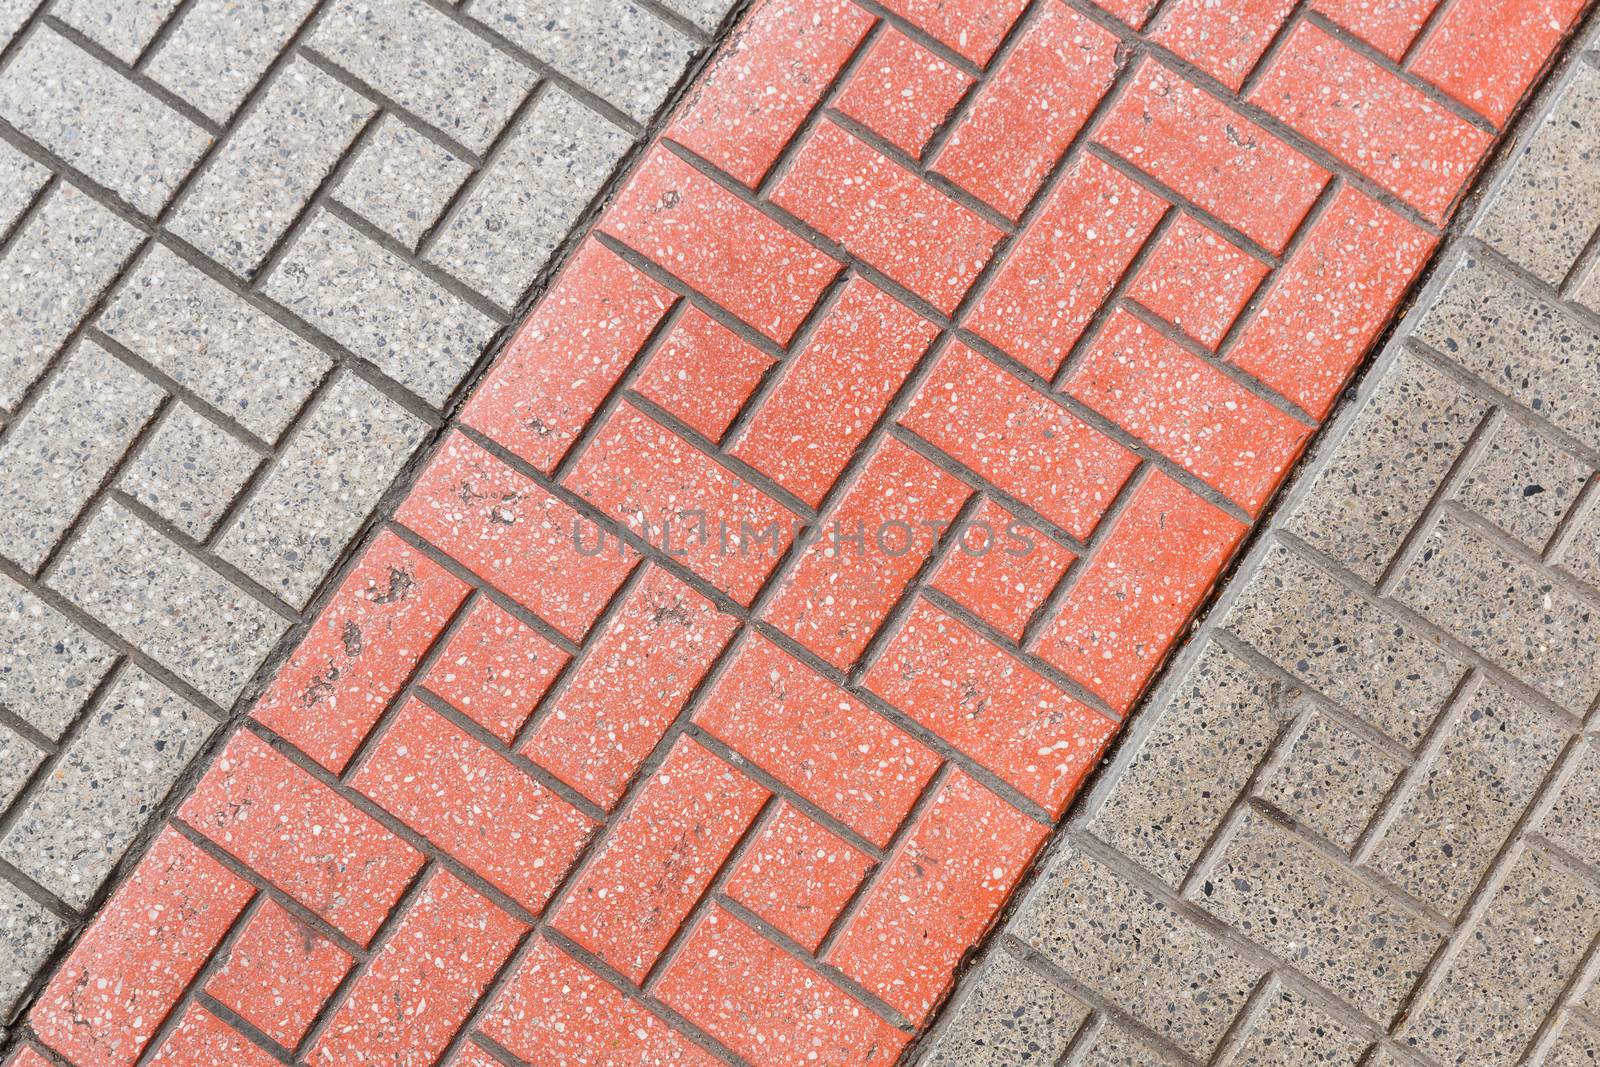 floor tiles footpath walkway concrete granite pavement pattern path sidewalk stone surface background street brick block rough architecture